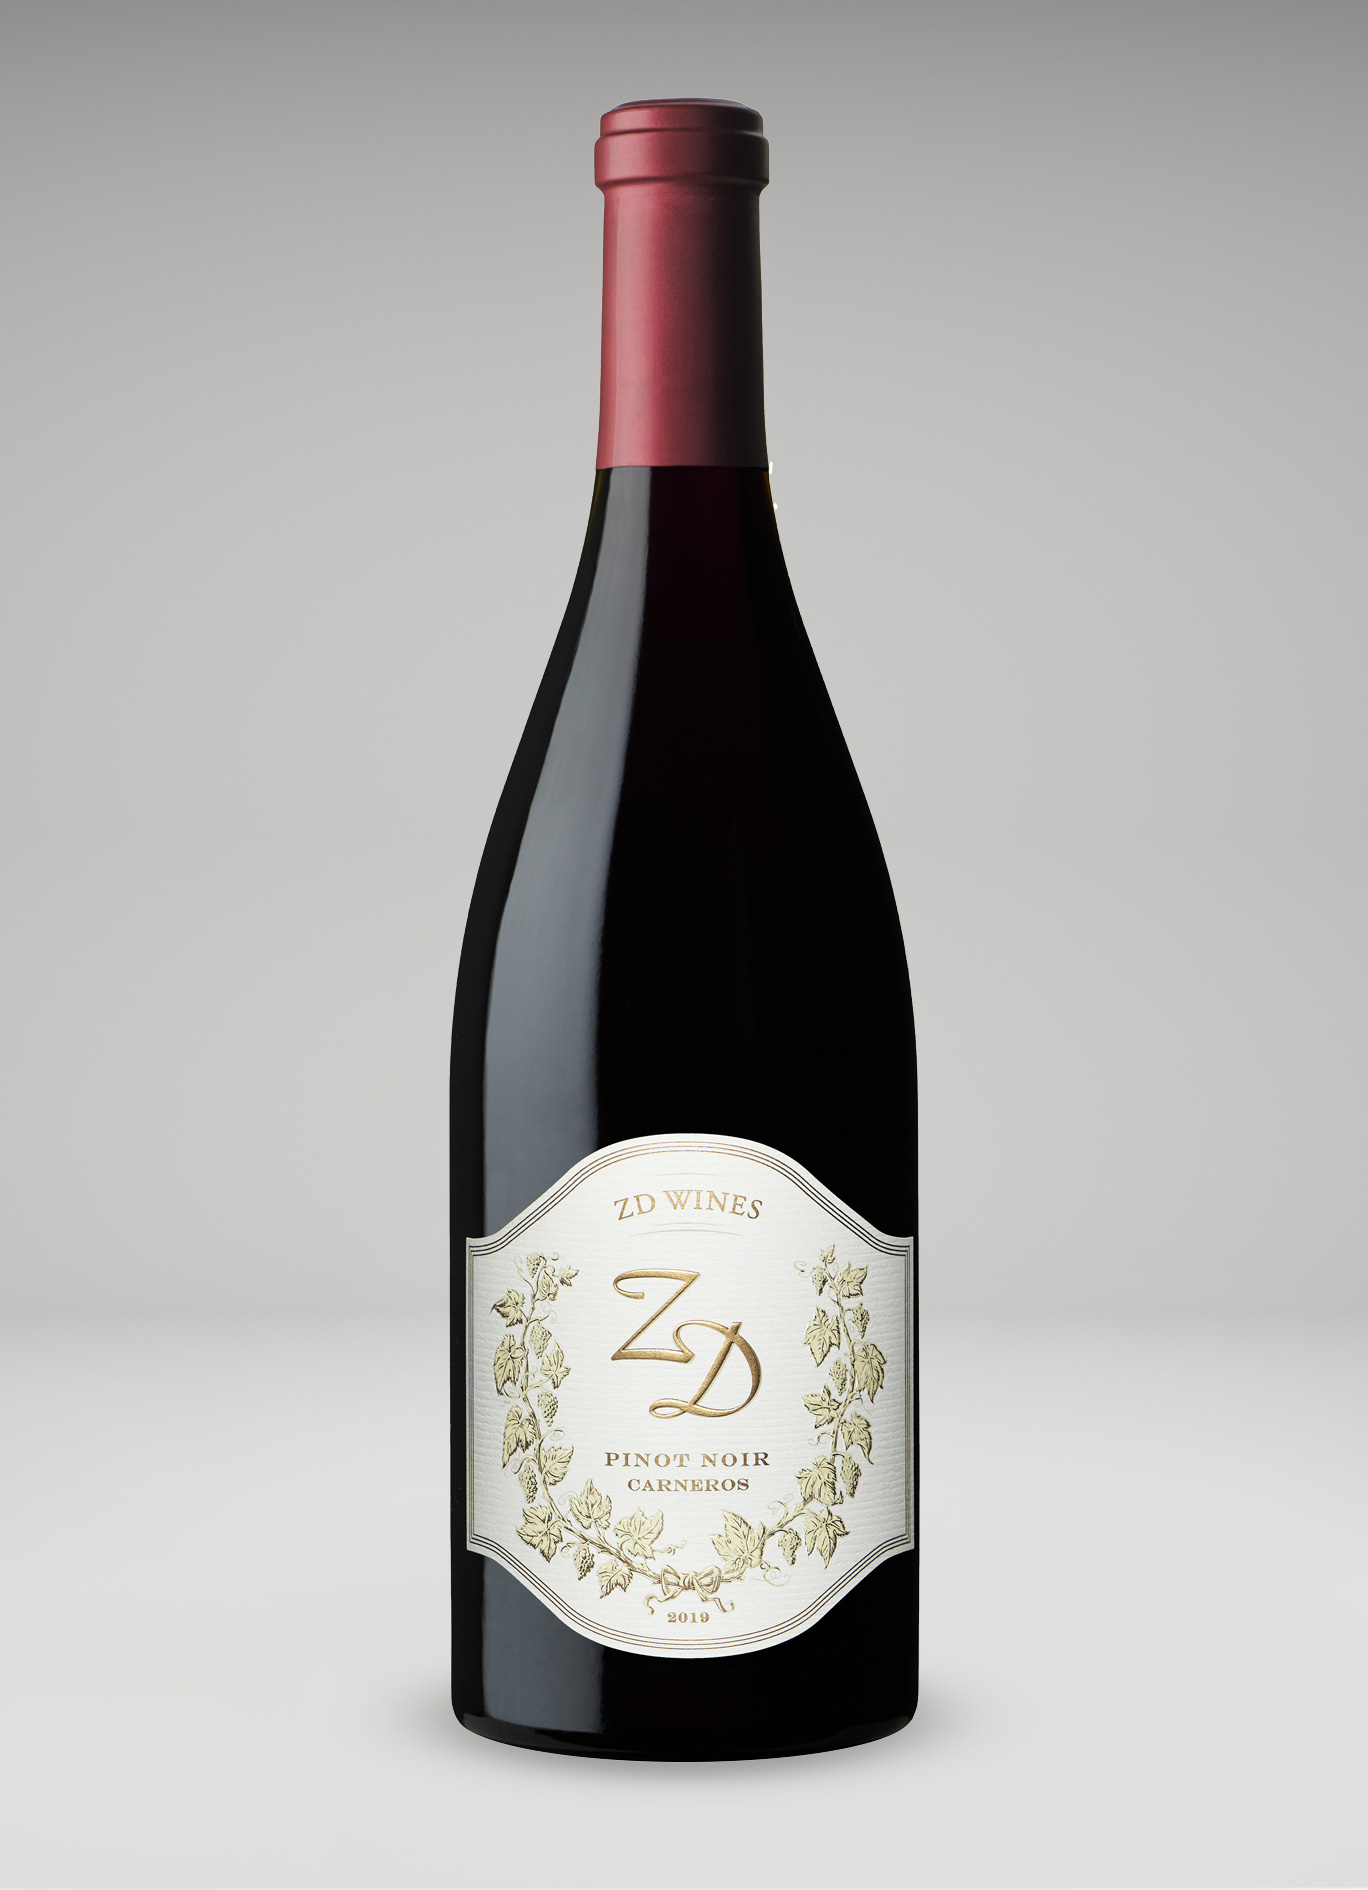 A bottle of 2019 ZD Pinot Noir, Carneros